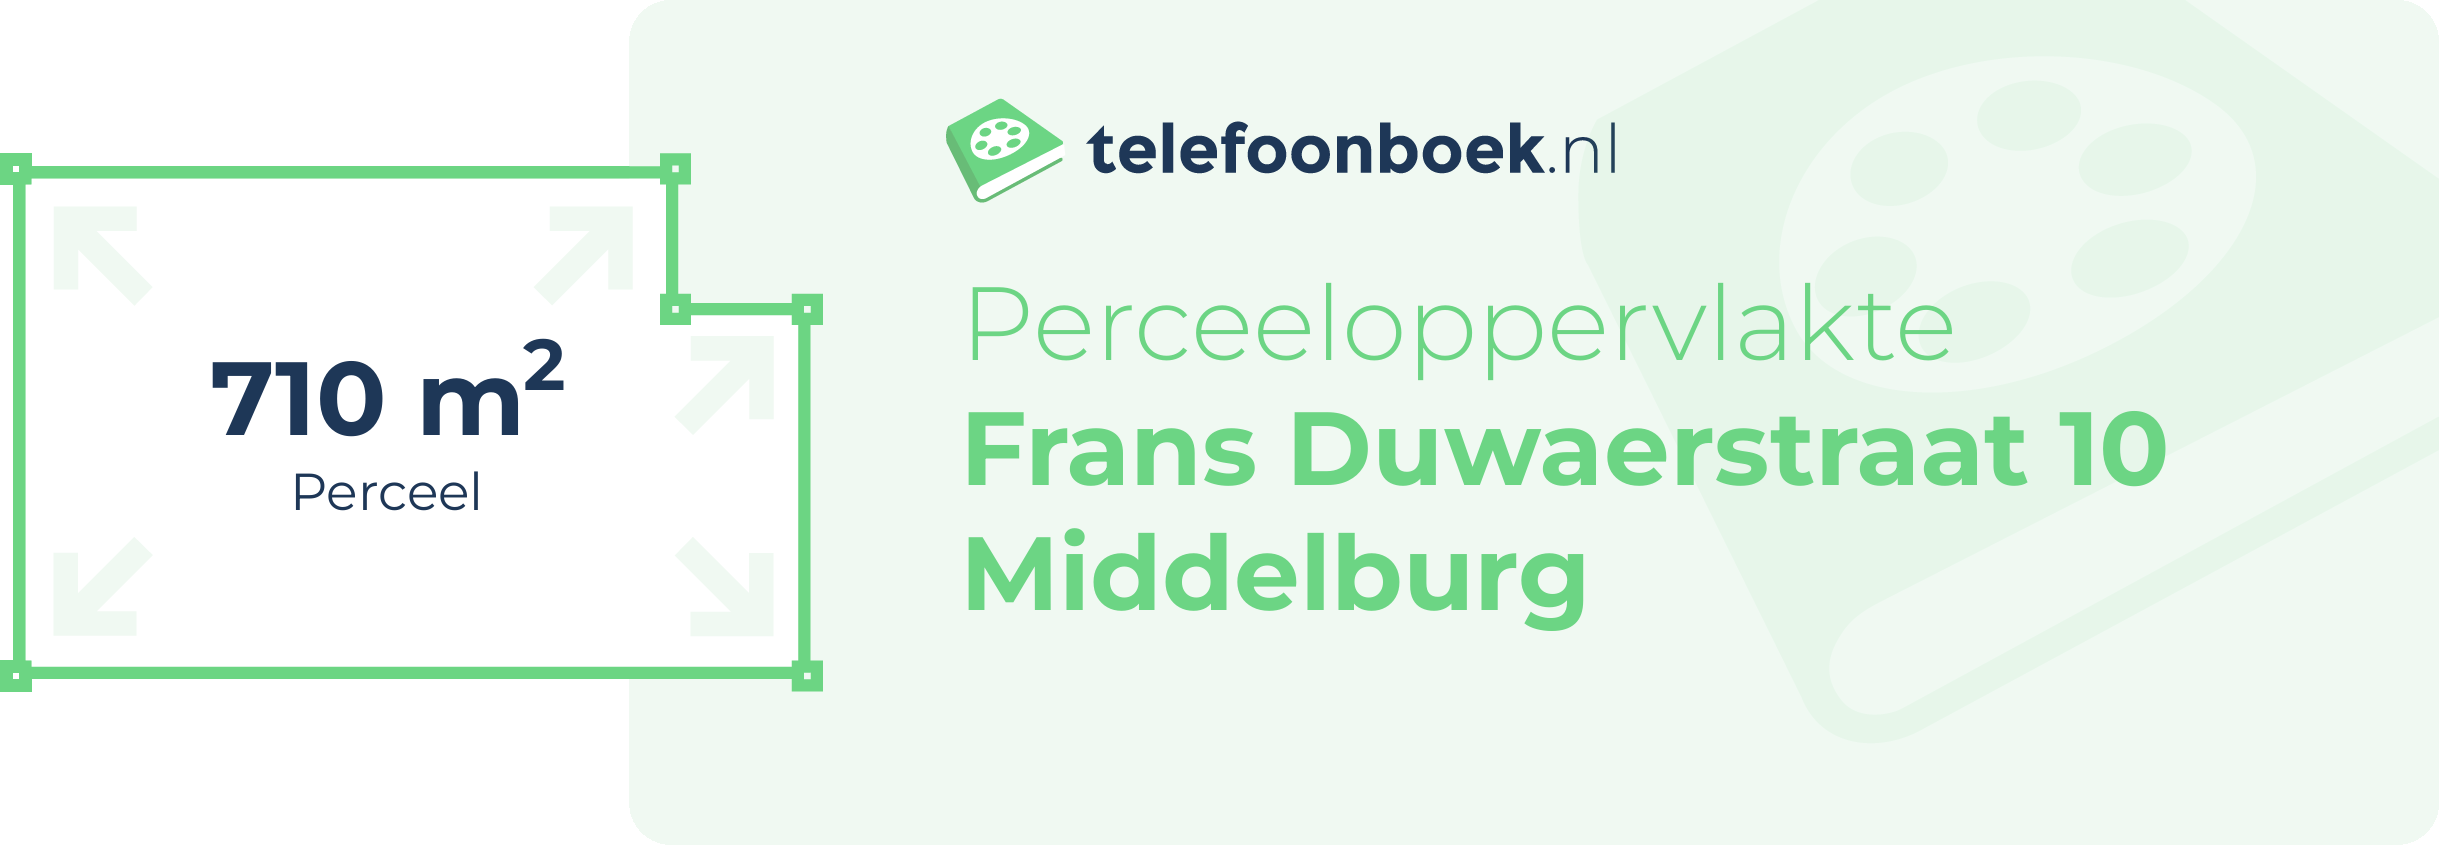 Perceeloppervlakte Frans Duwaerstraat 10 Middelburg